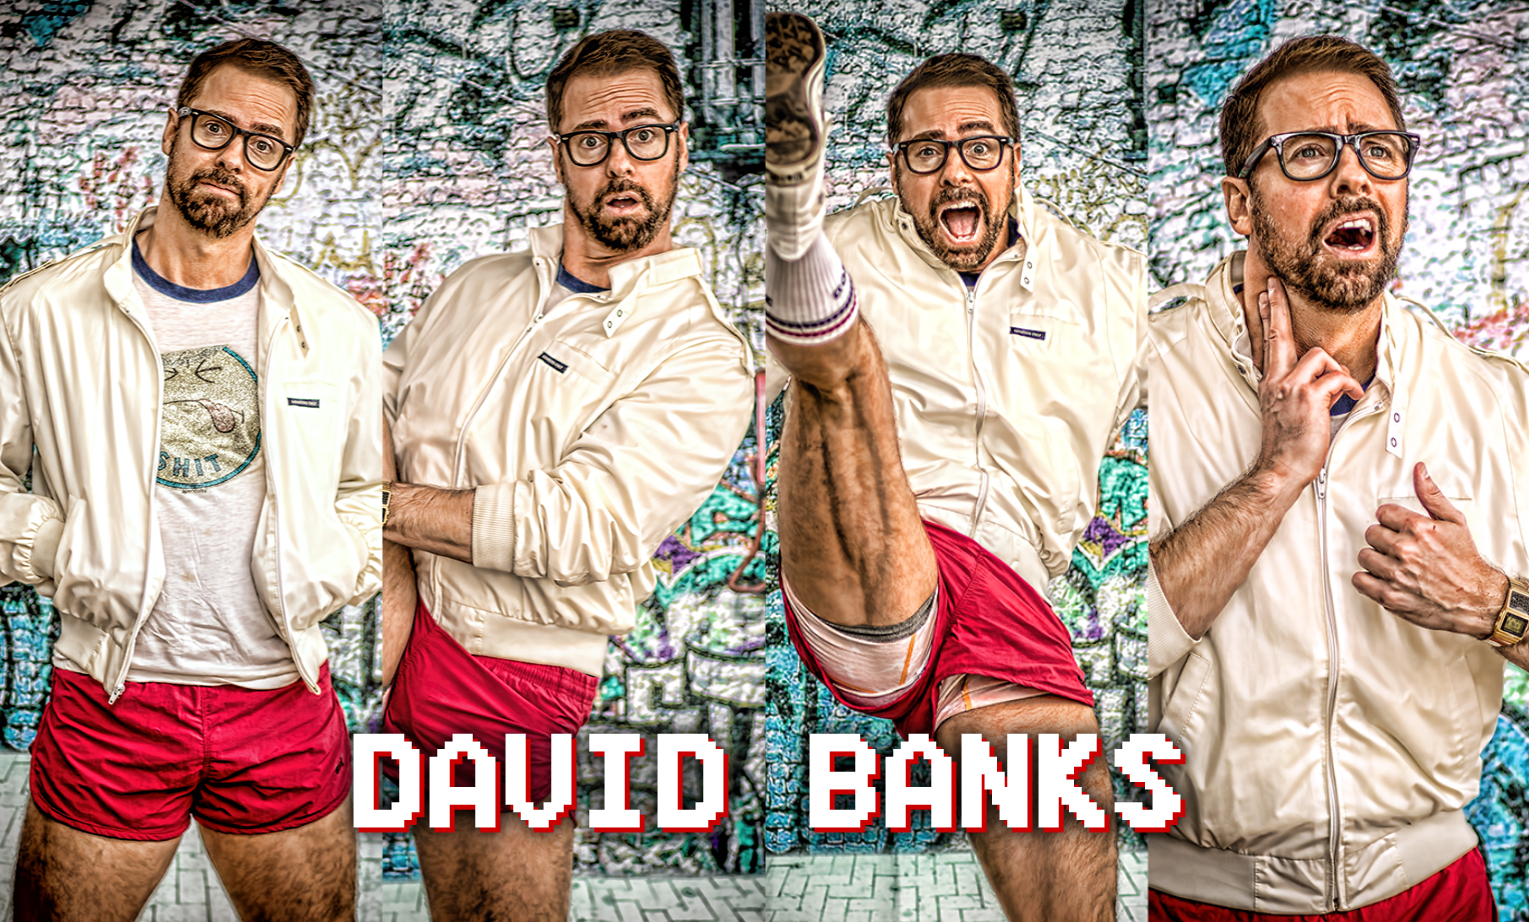 David Banks